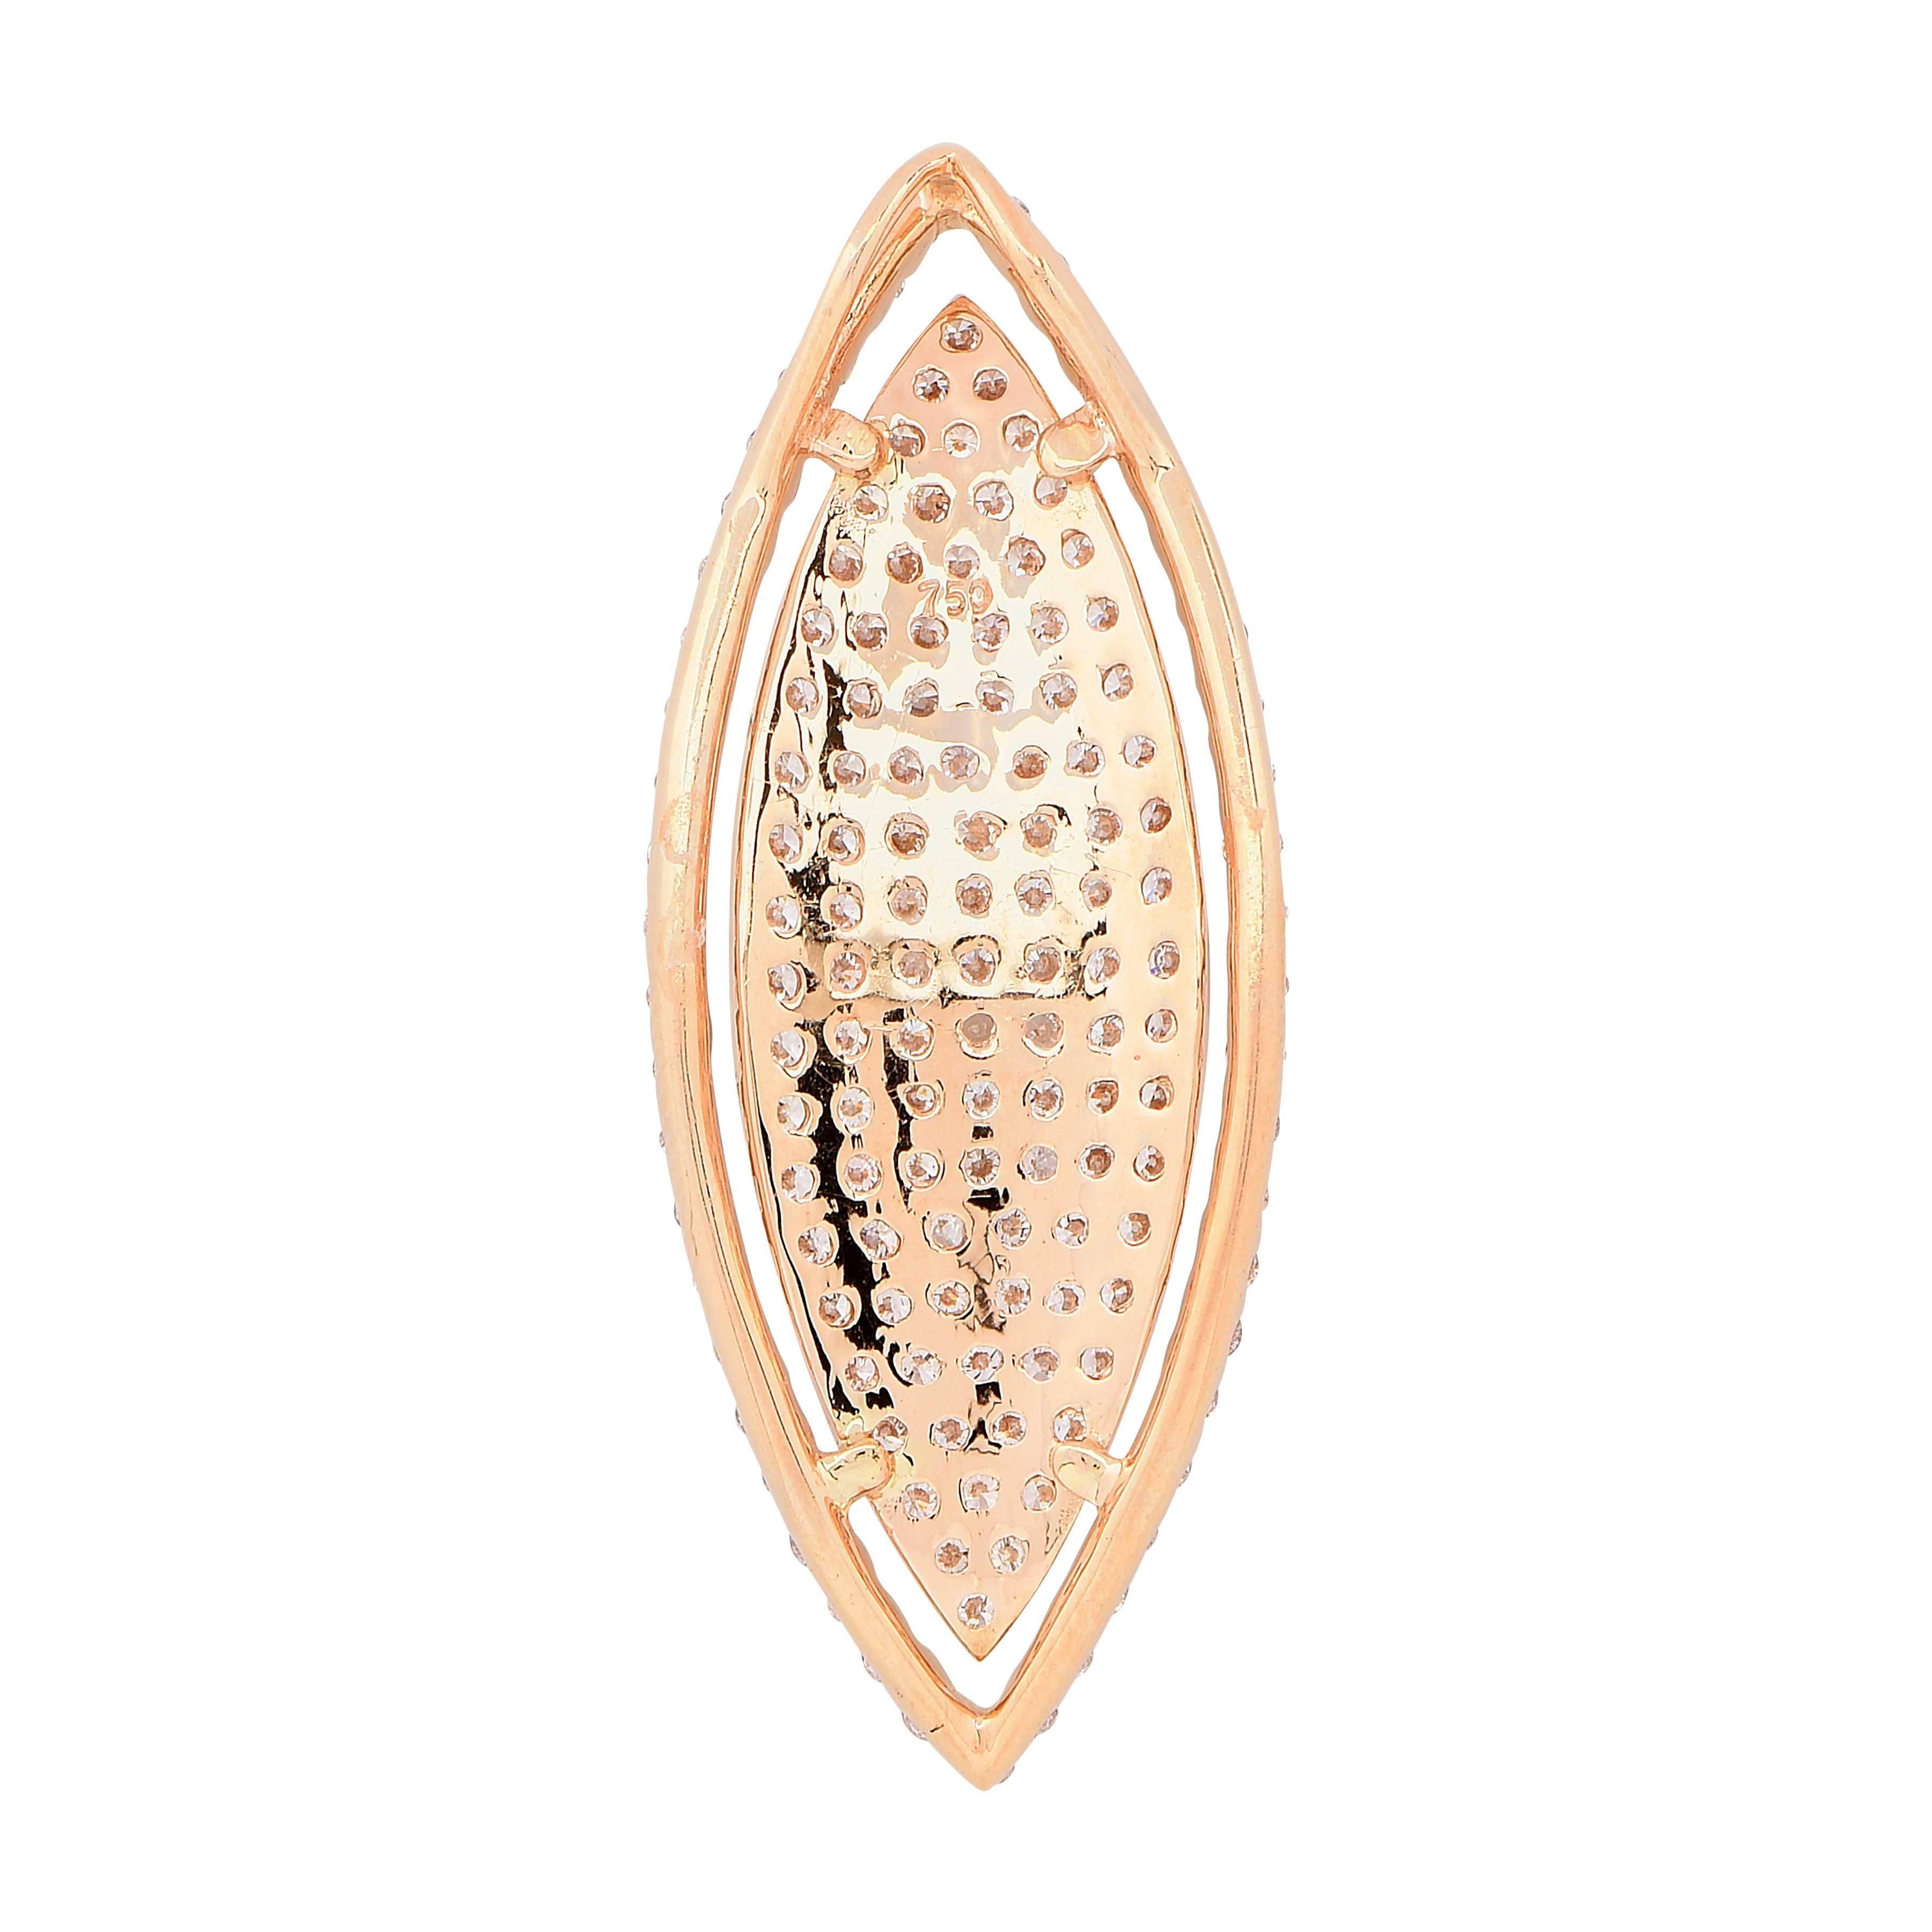 2.8 Carat Diamond Marquise shape pendant featuring 153 round cut diamonds bead set in 18 karat rose gold.

Metal Type: 18 Karat Rose Gold (stamped and/or tested)
Metal Weight: 6 Grams